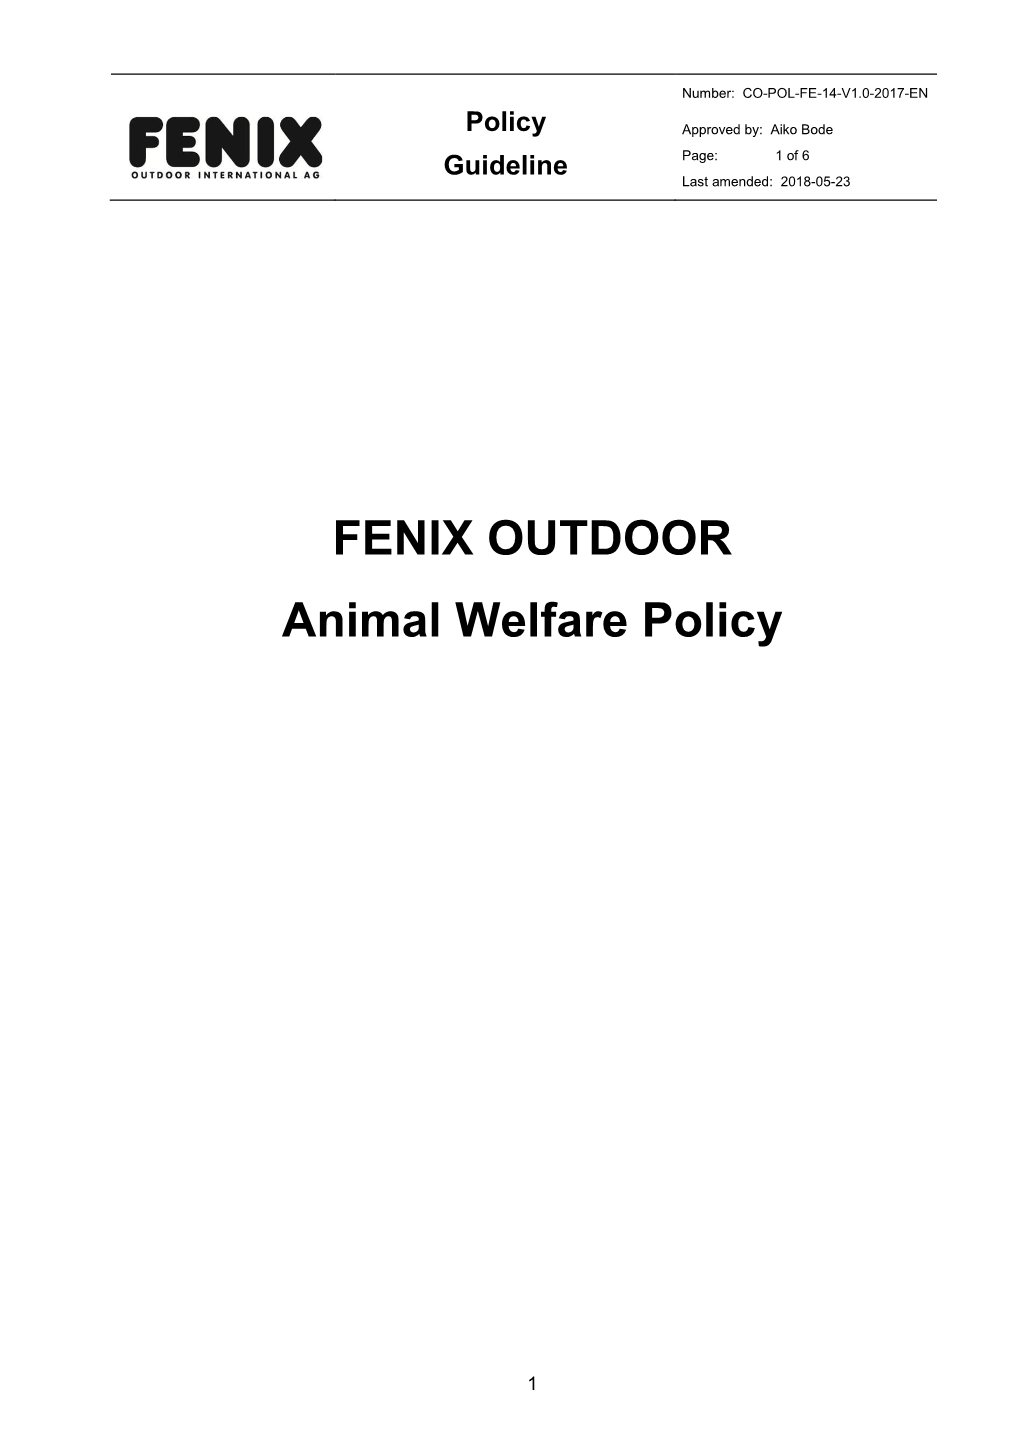 FENIX OUTDOOR Animal Welfare Policy